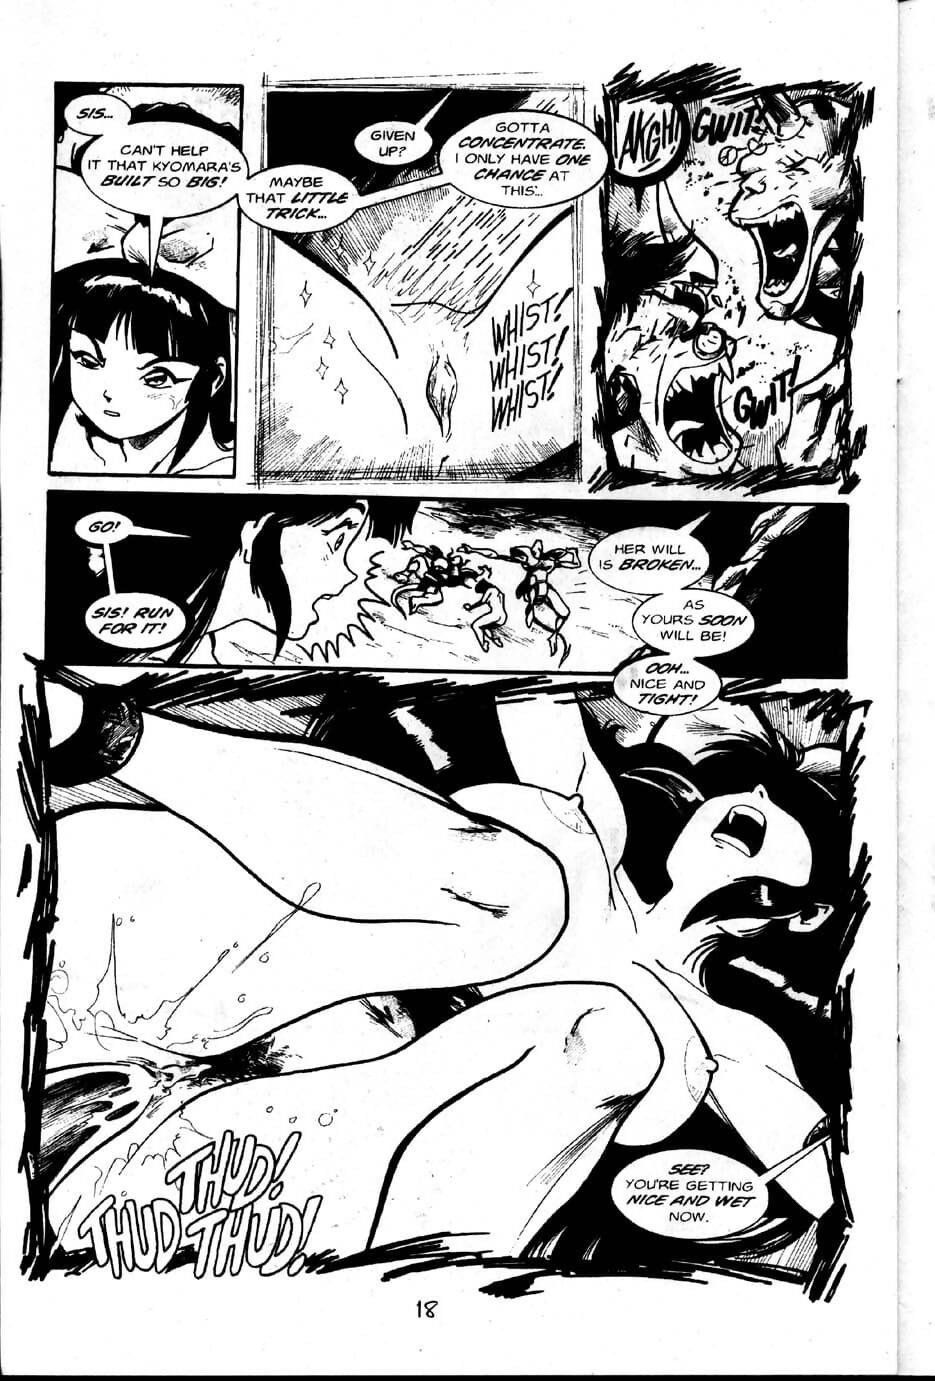 La Blue Girl - Volume #2 page 1